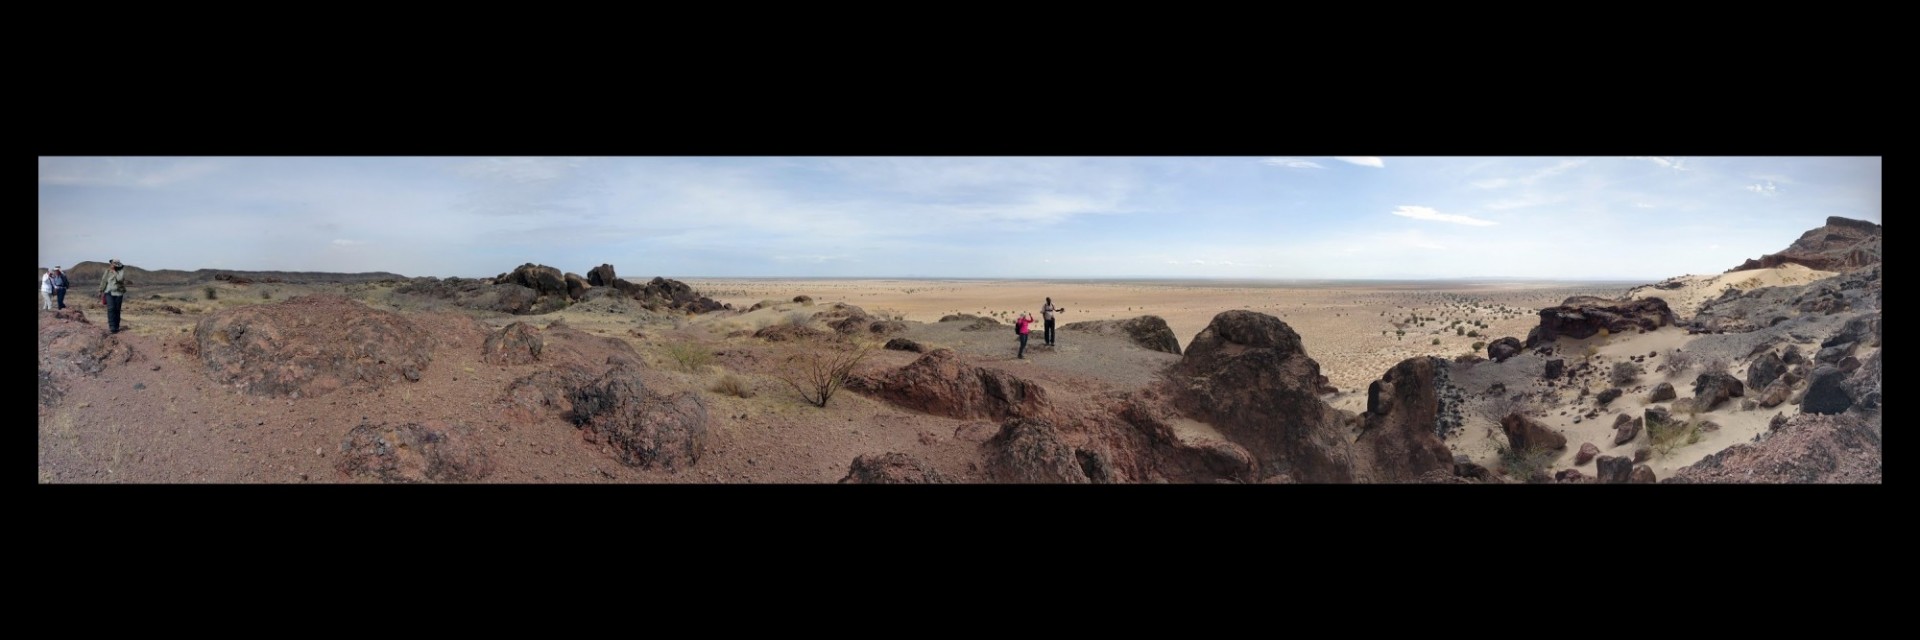 Geologists standing on basalt flows overlooking an expanse